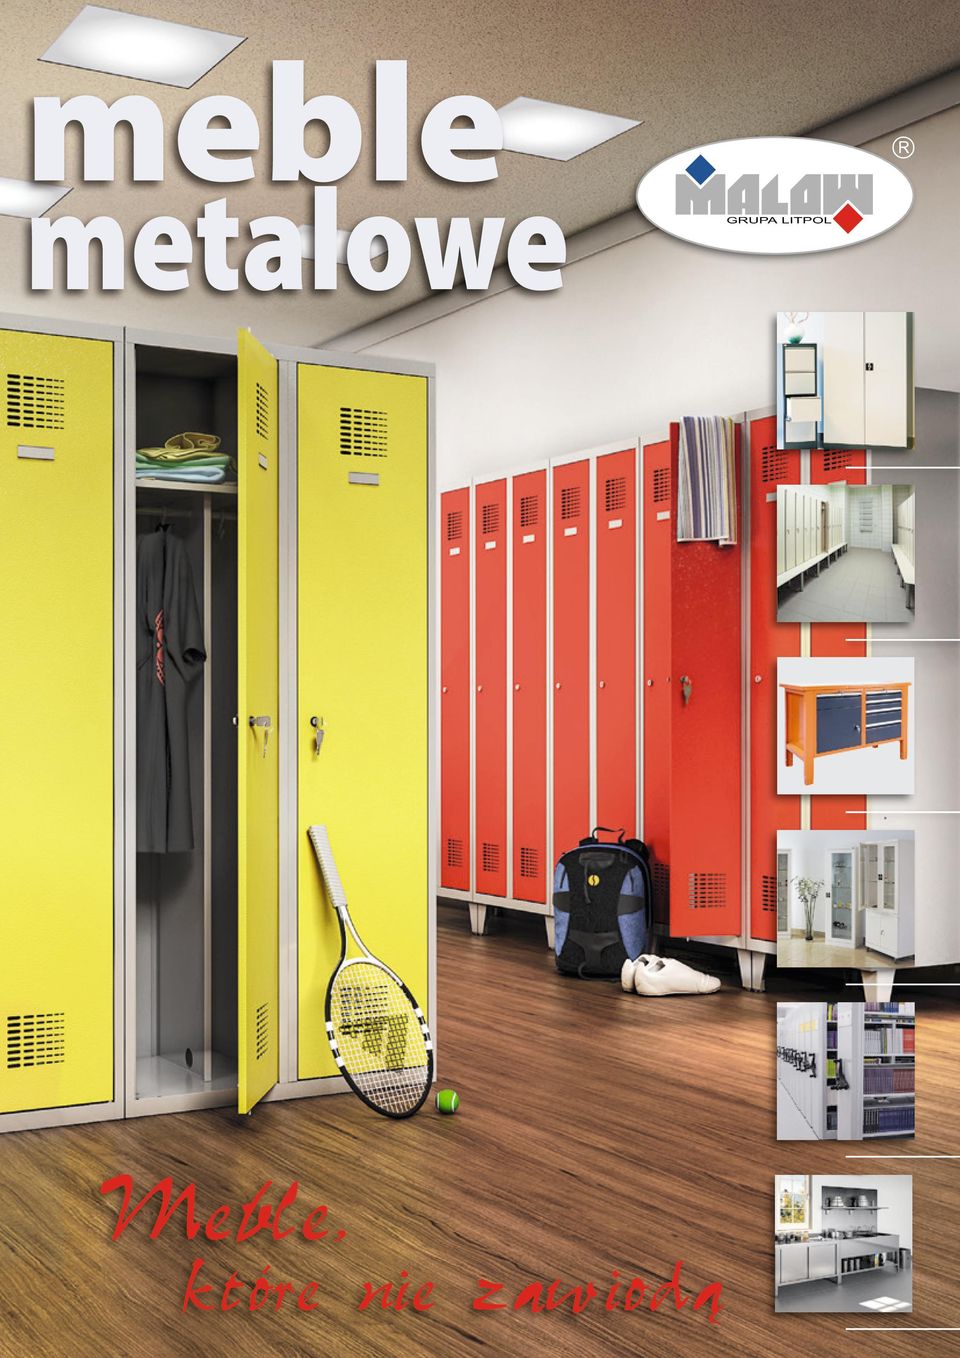 meble metalowe Meble, które nie zawiodą - PDF Free Download